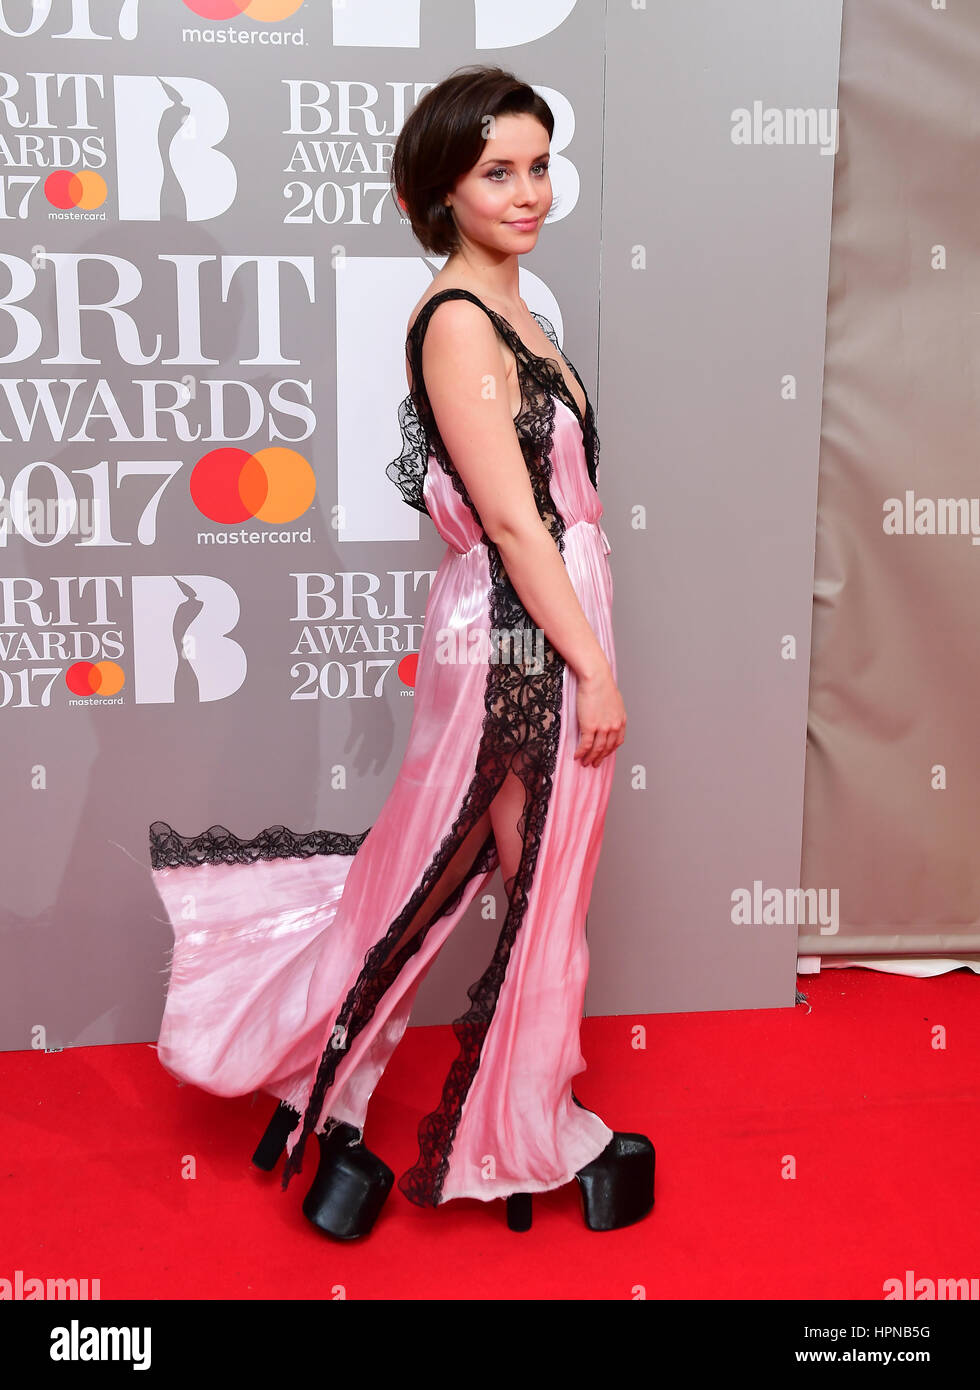 Billie JD Porter attending the Brit Awards at the O2 Arena, London. PRESS ASSOCIATION Photo Stock Photo